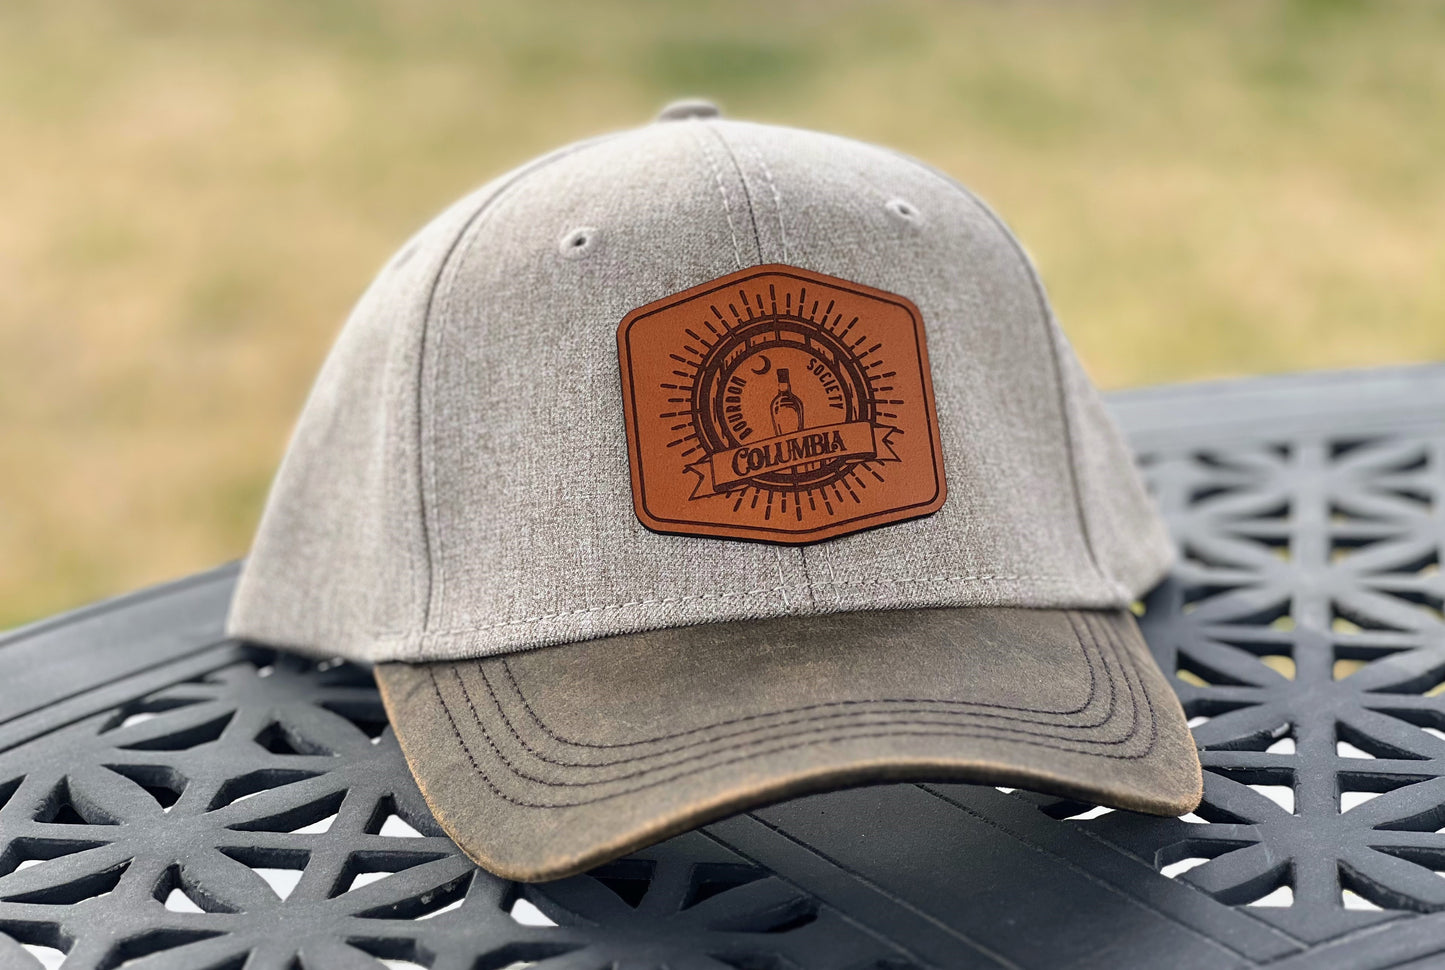 Columbia Bourbon Society - Sunburst Hexagon - Leather Patch Hat